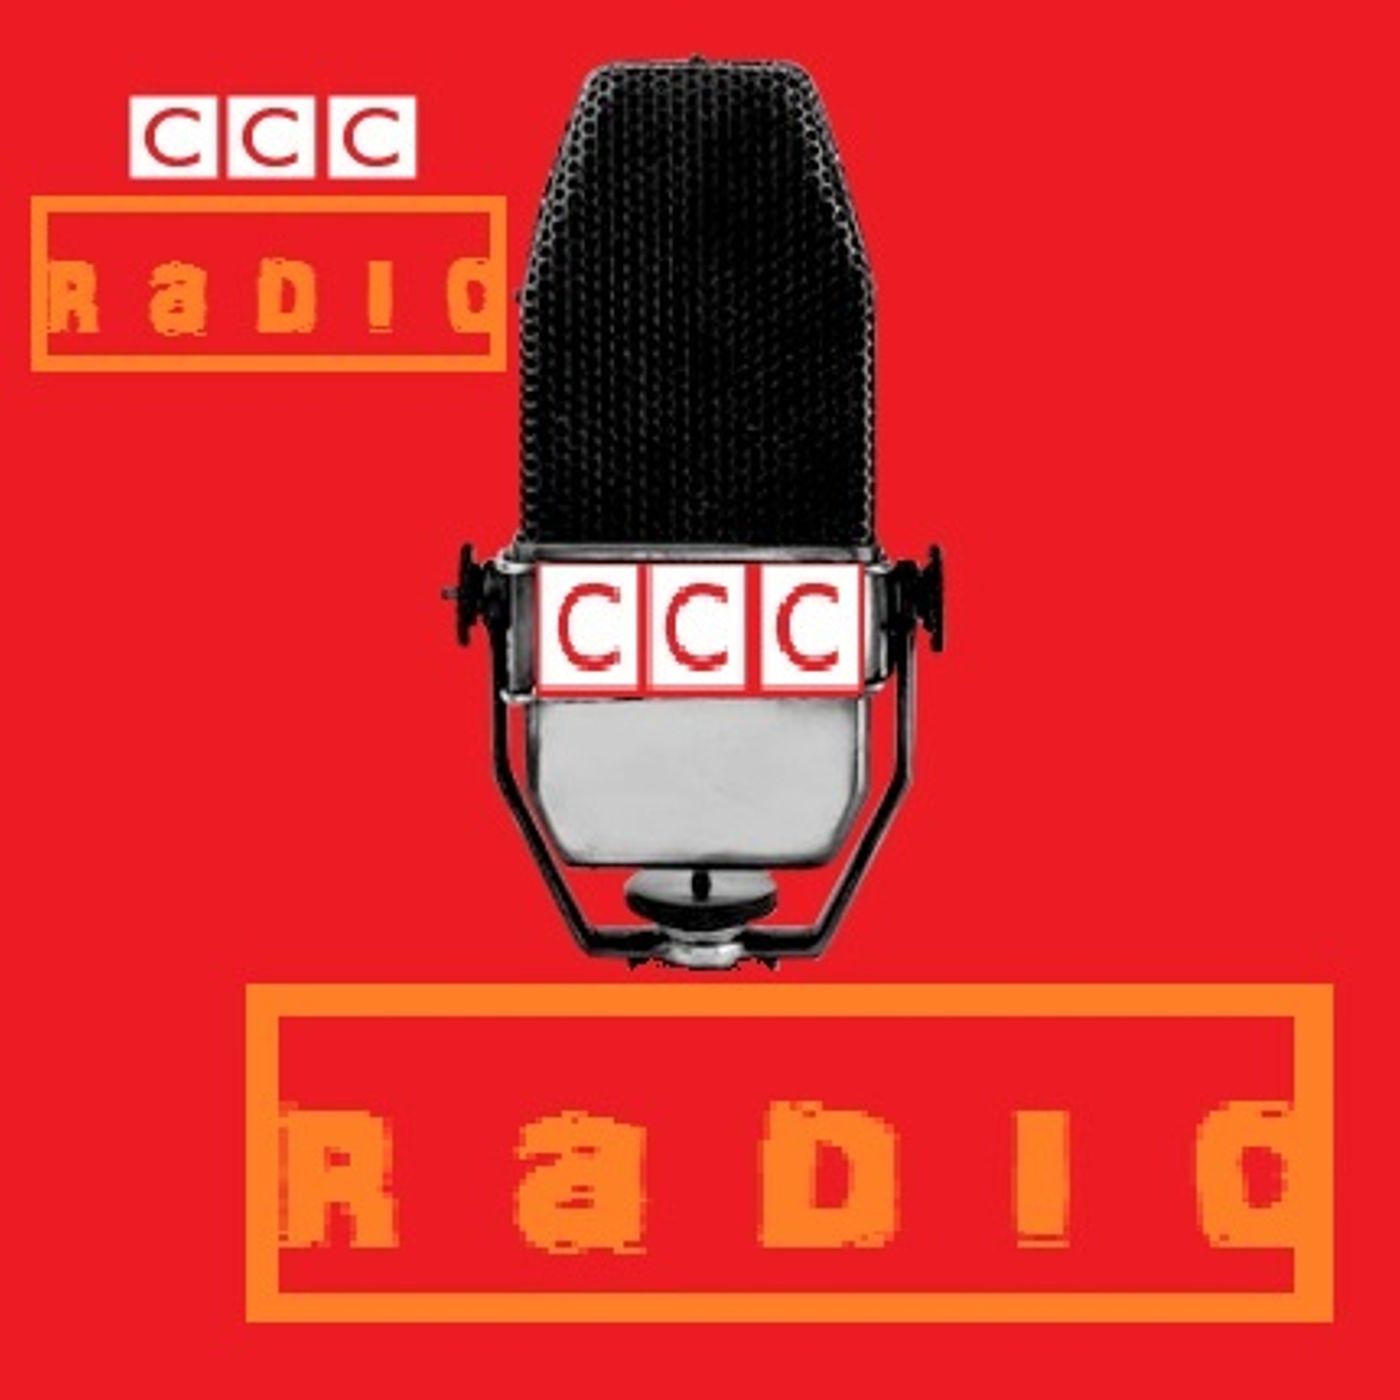 CCC Radio's show